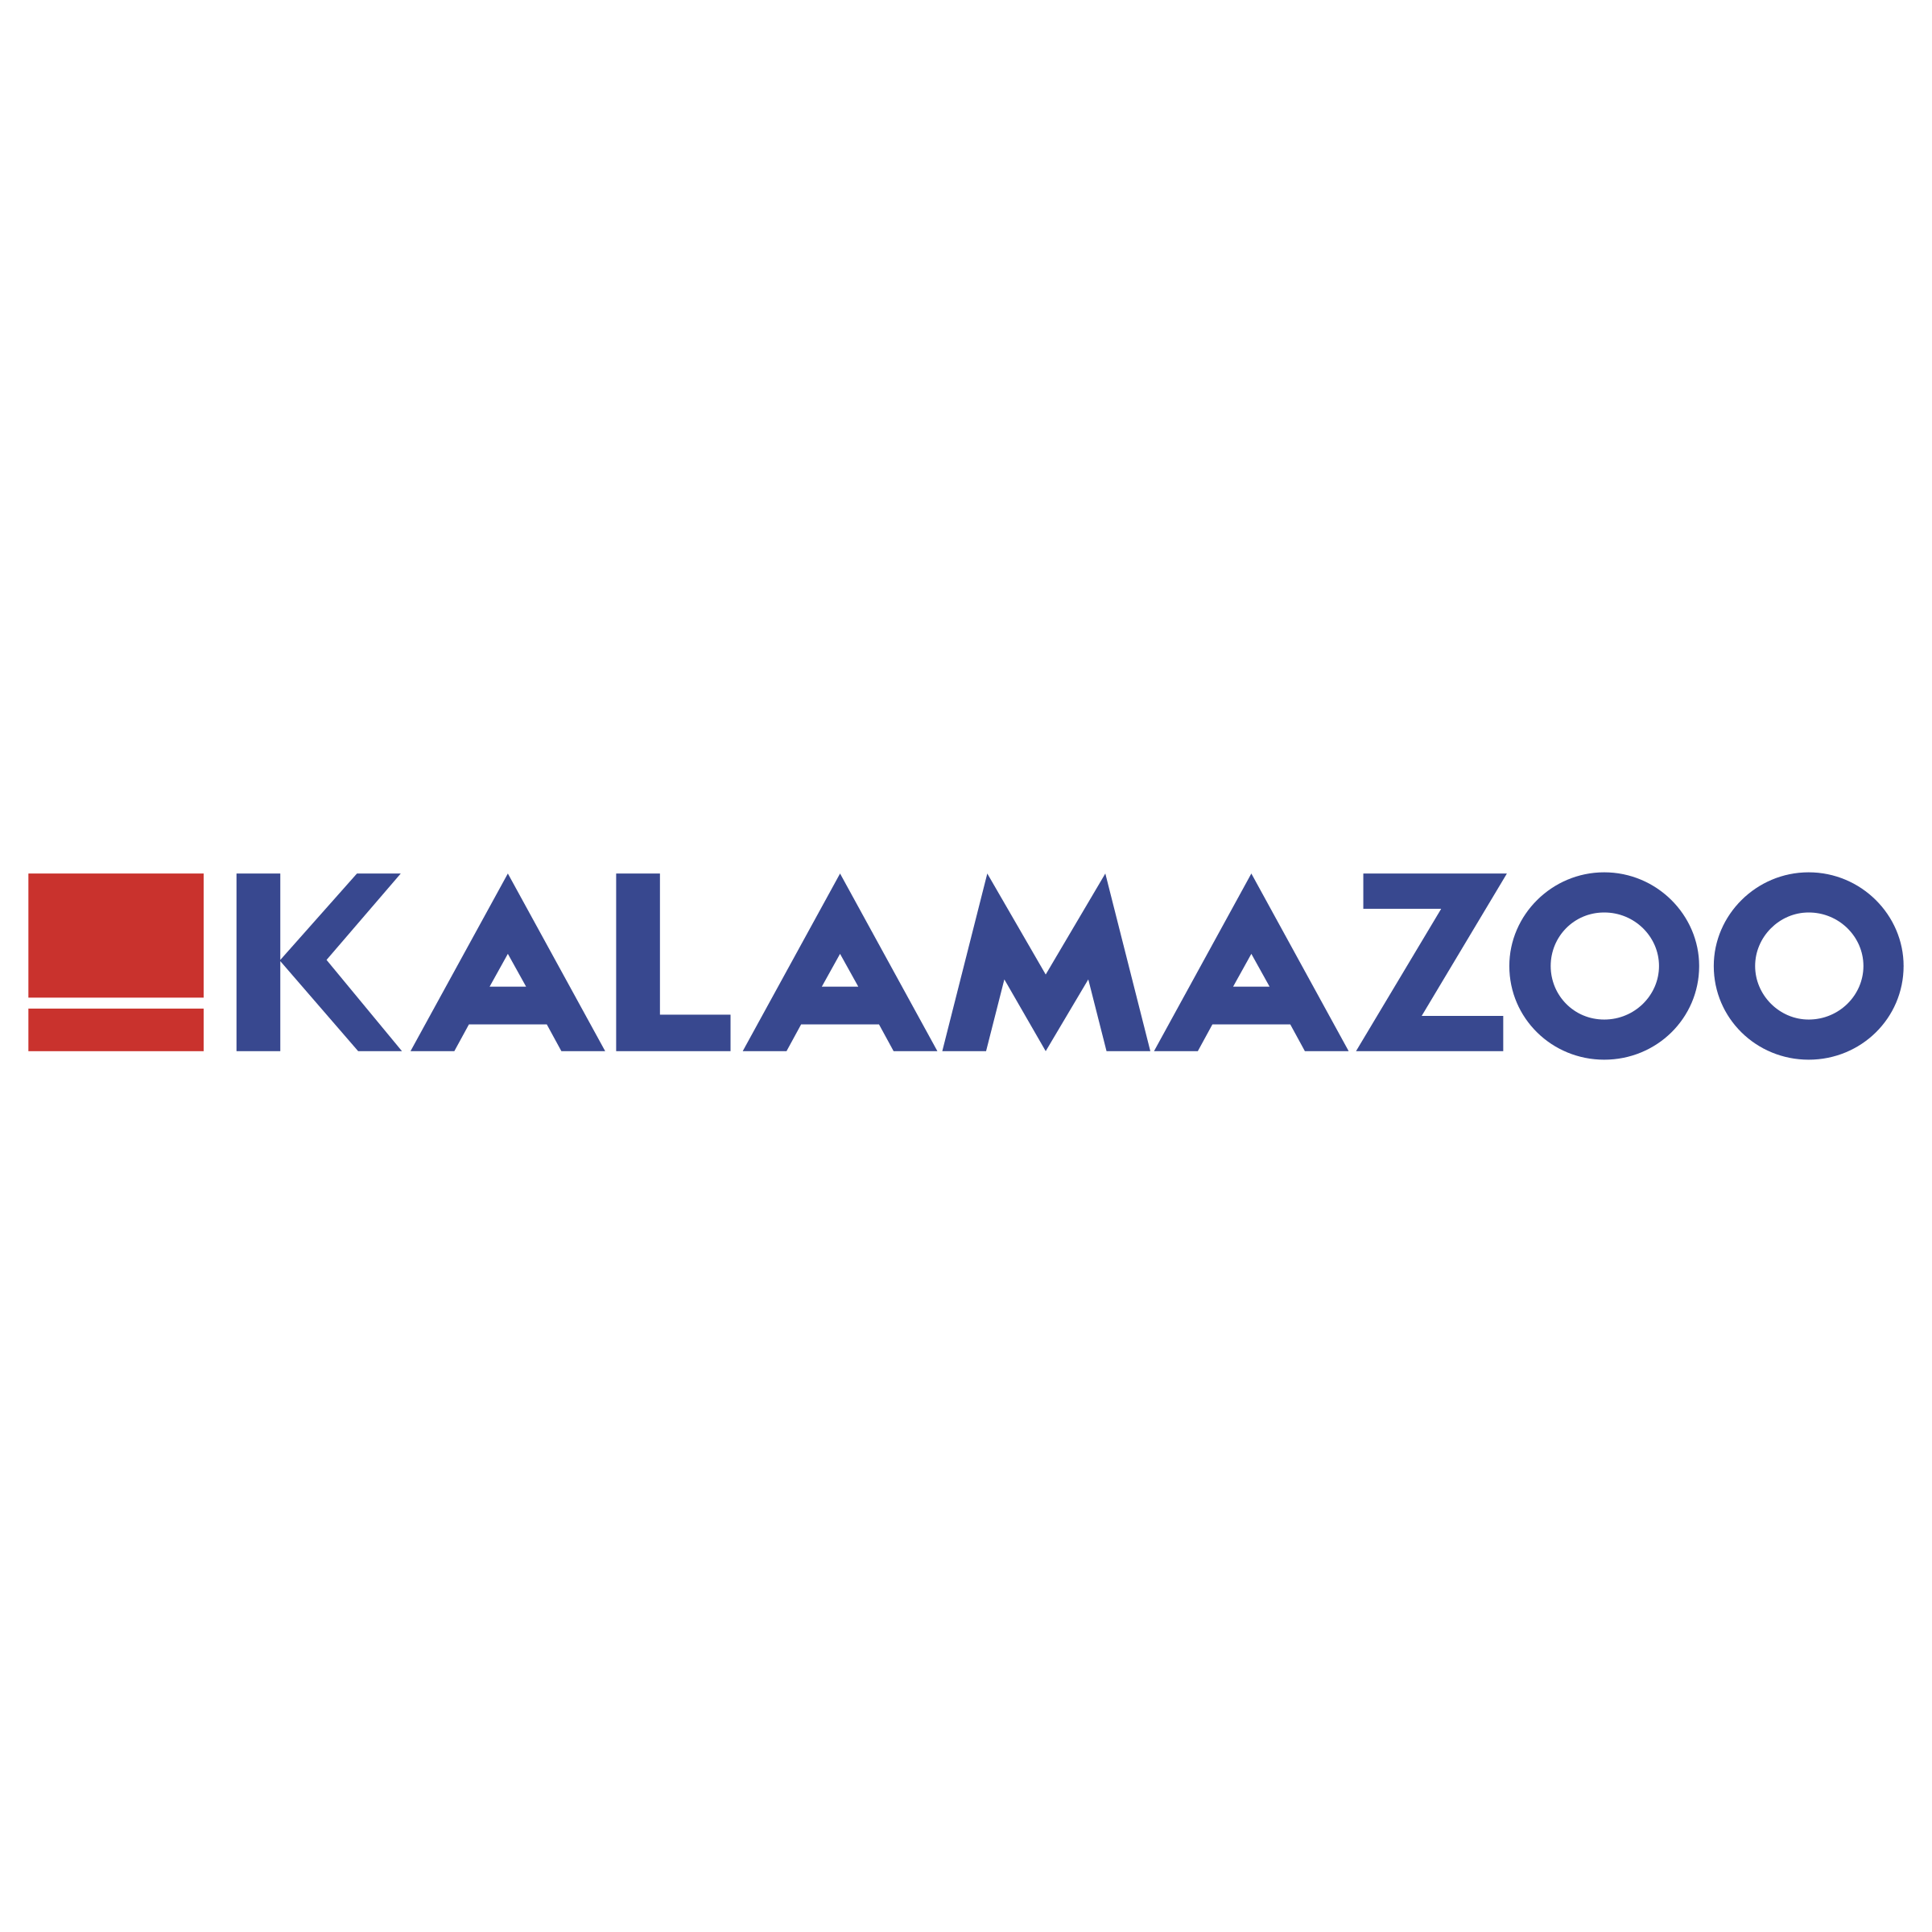 Kalamazoo Logo - Kalamazoo Logo PNG Transparent & SVG Vector